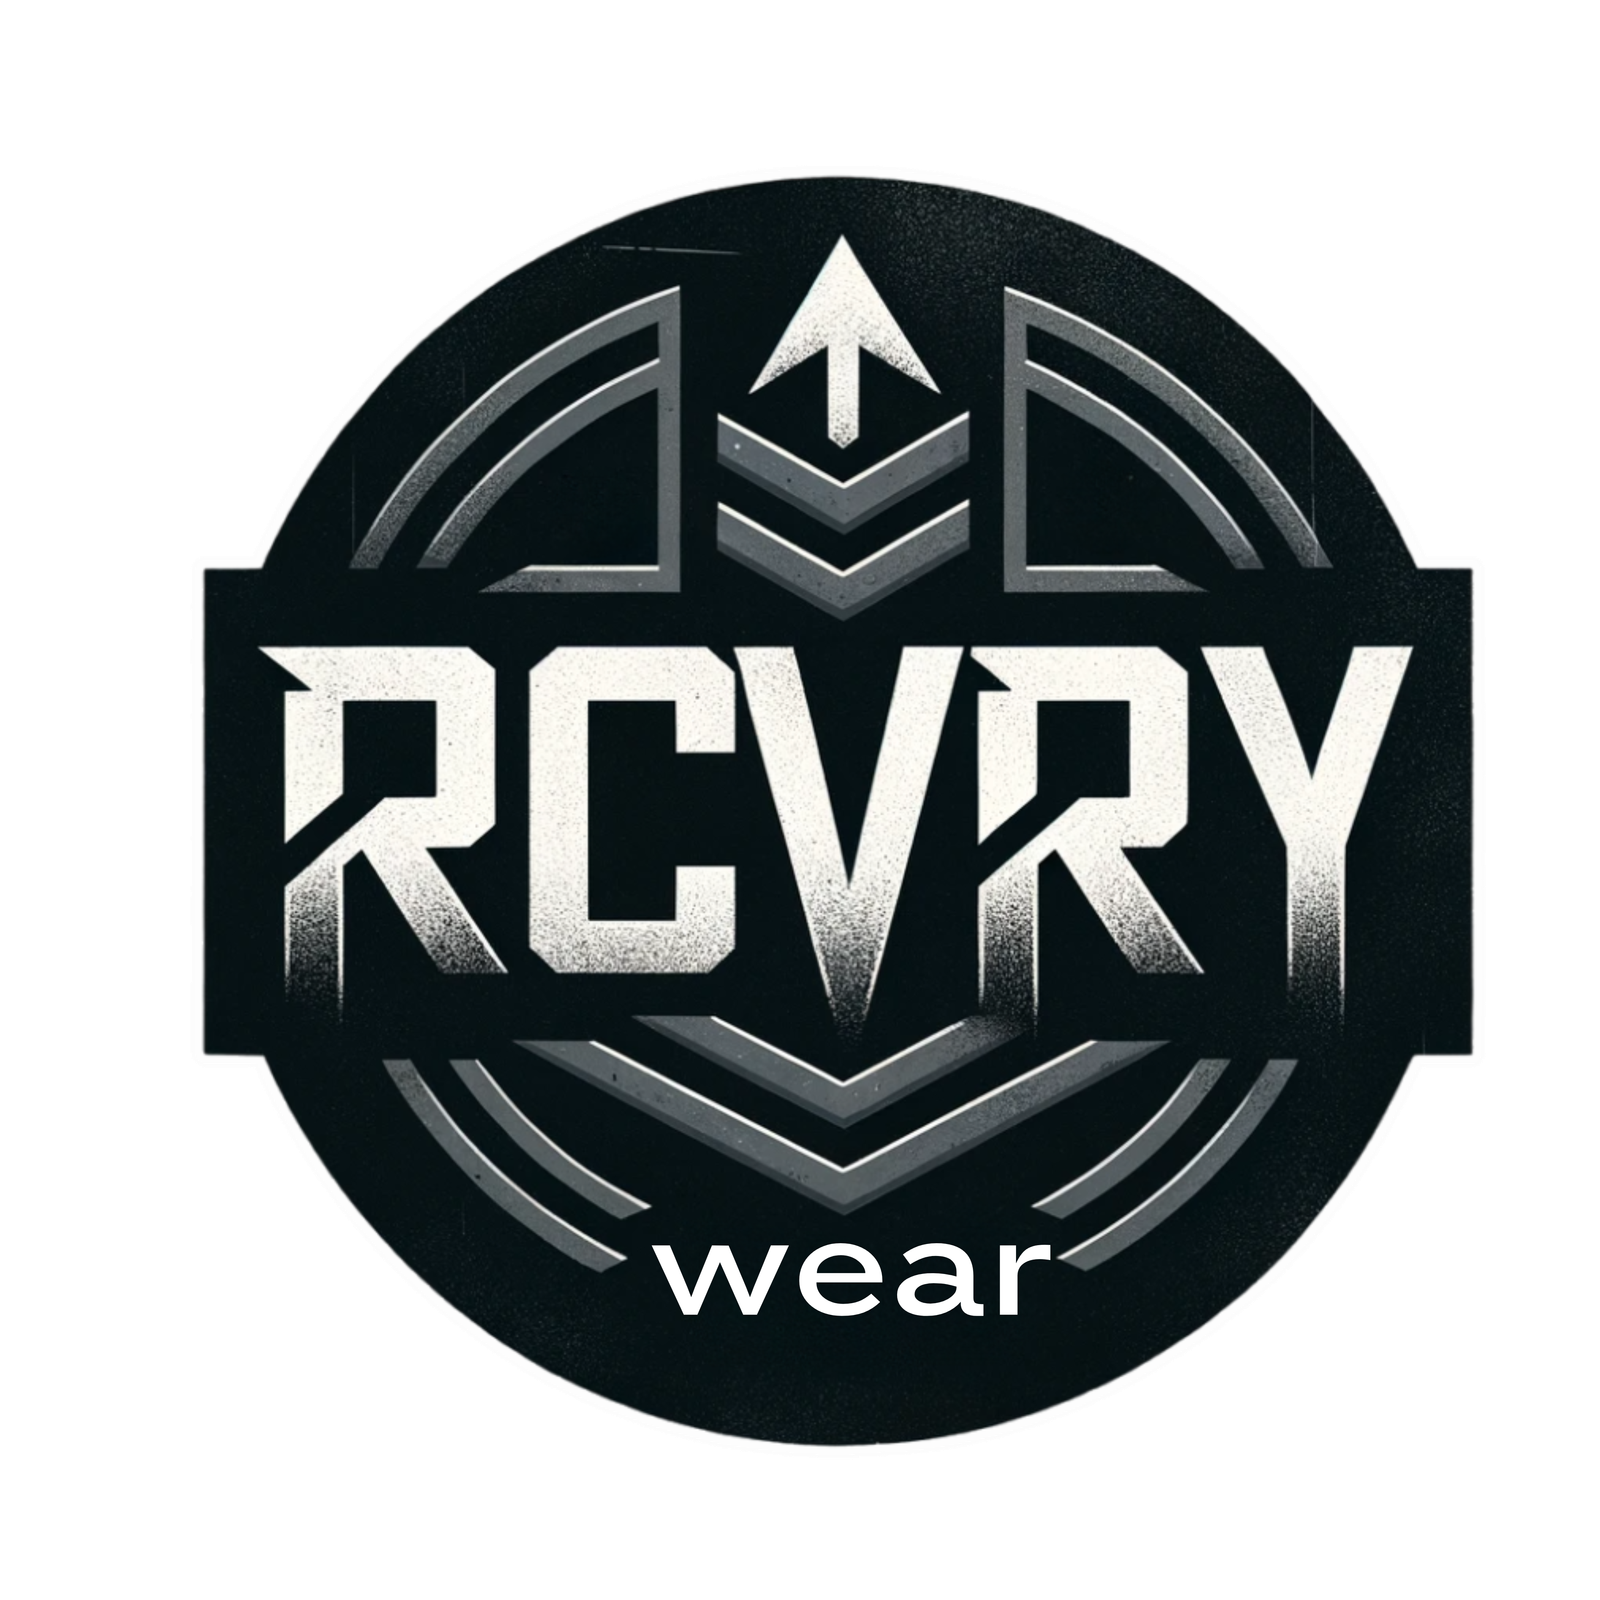 RCVRY wear